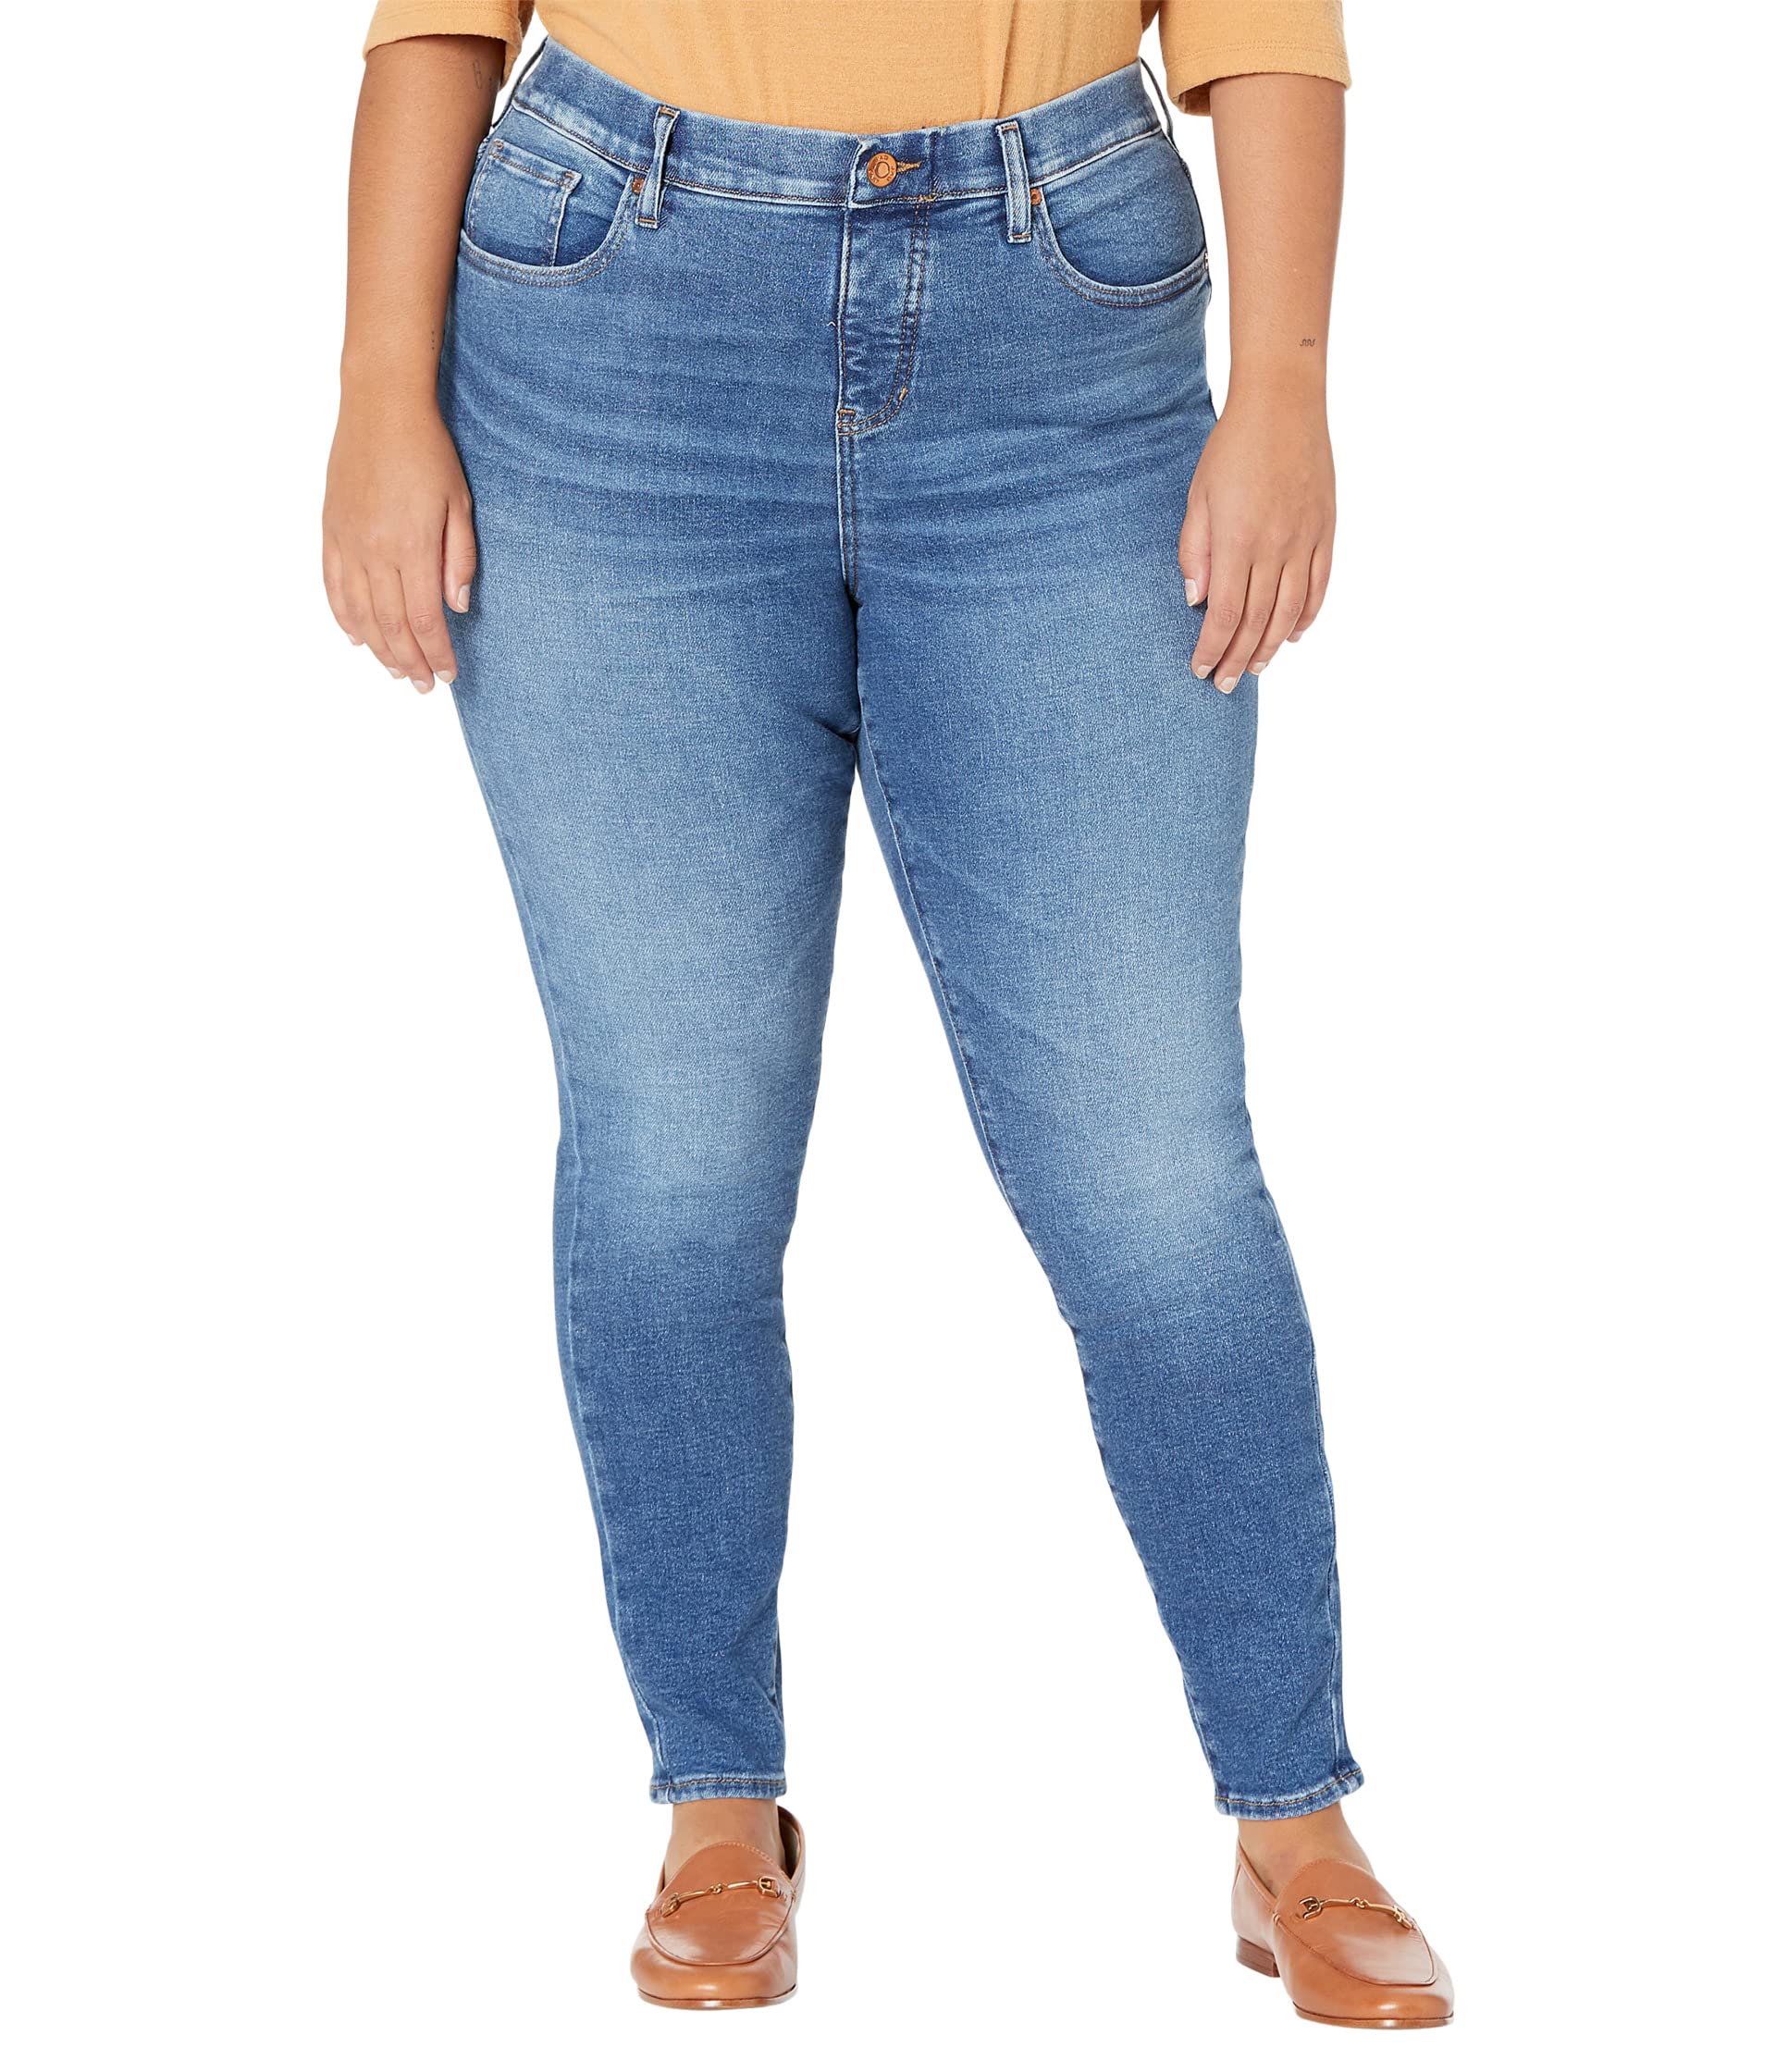 джинсы jag jeans plus size cecilia mid rise skinny jeans цвет sky blue Джинсы Jag Jeans, Plus Size Valentina High-Rise Skinny Jeans